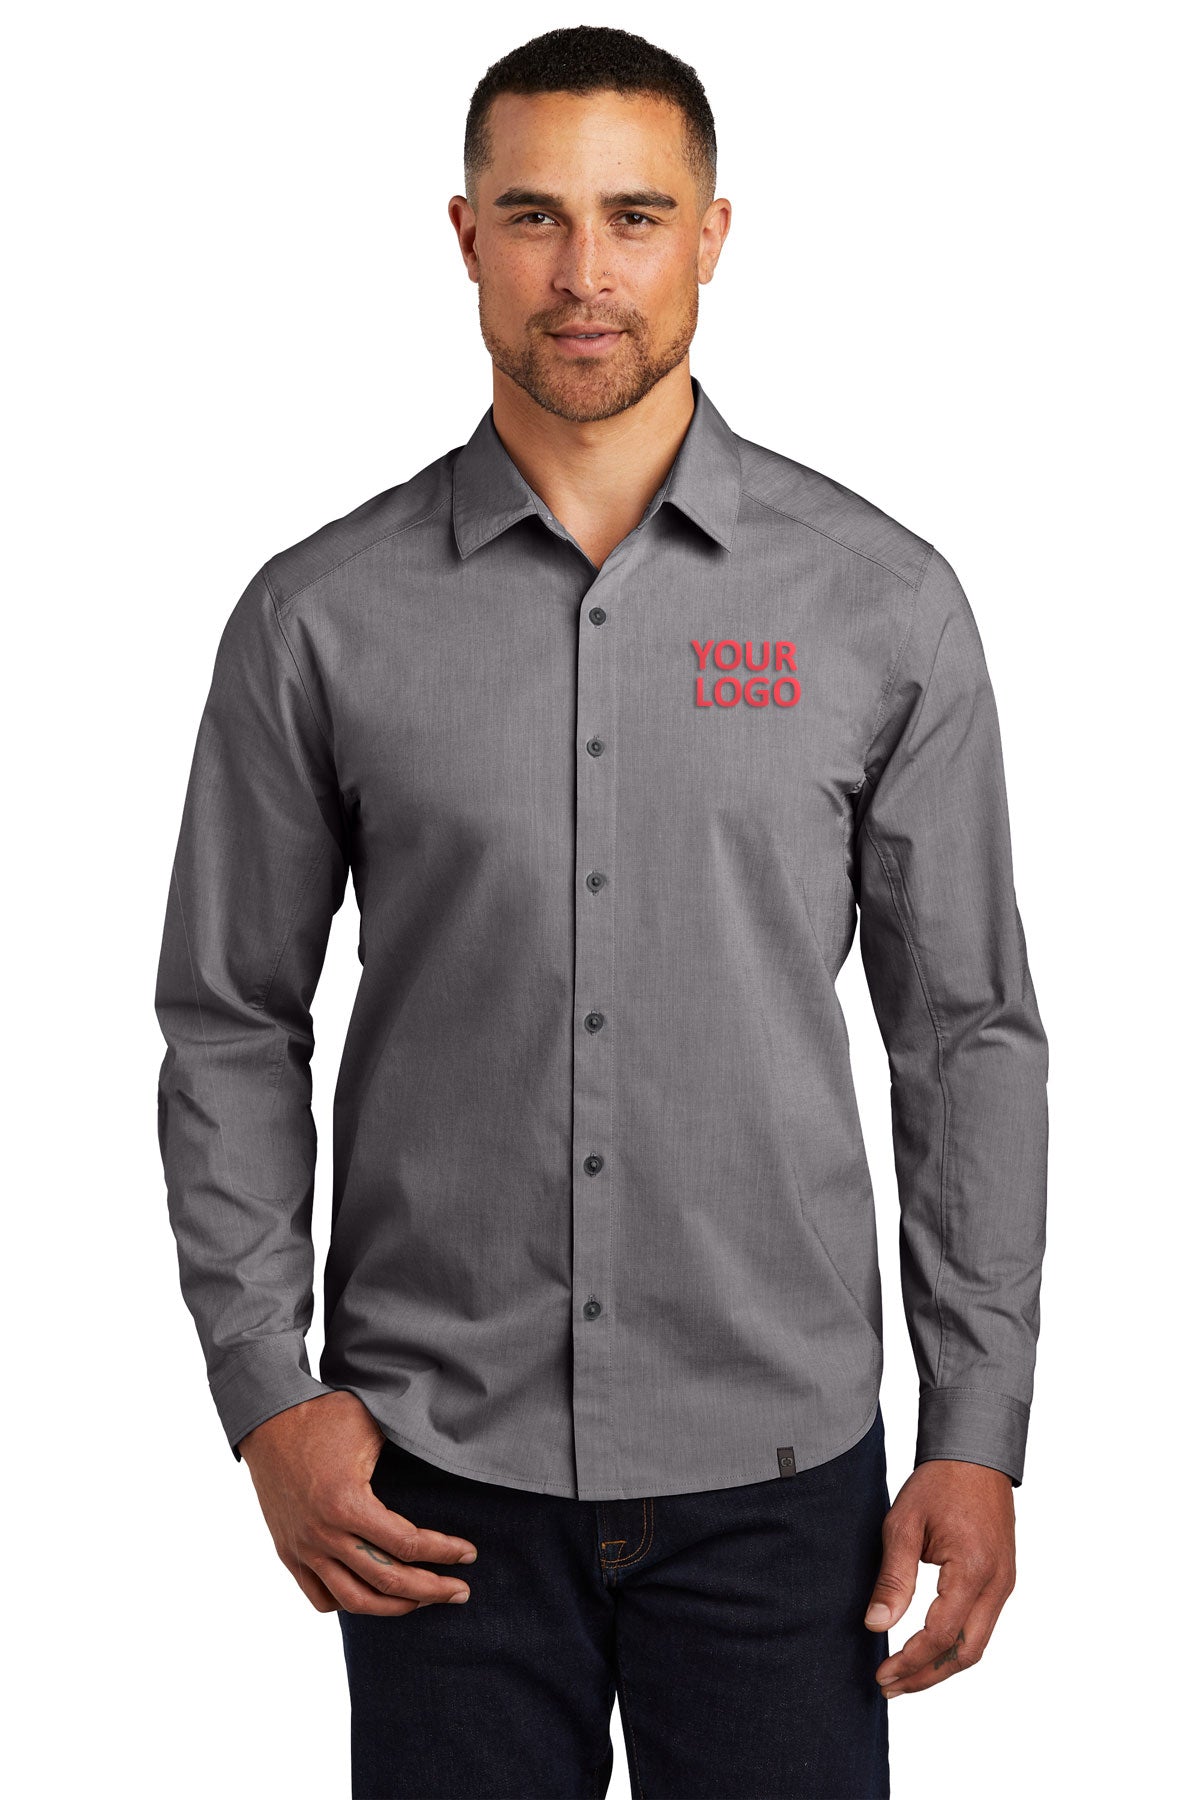 OGIO Gear Grey Hthr OG1002 work shirts with logo